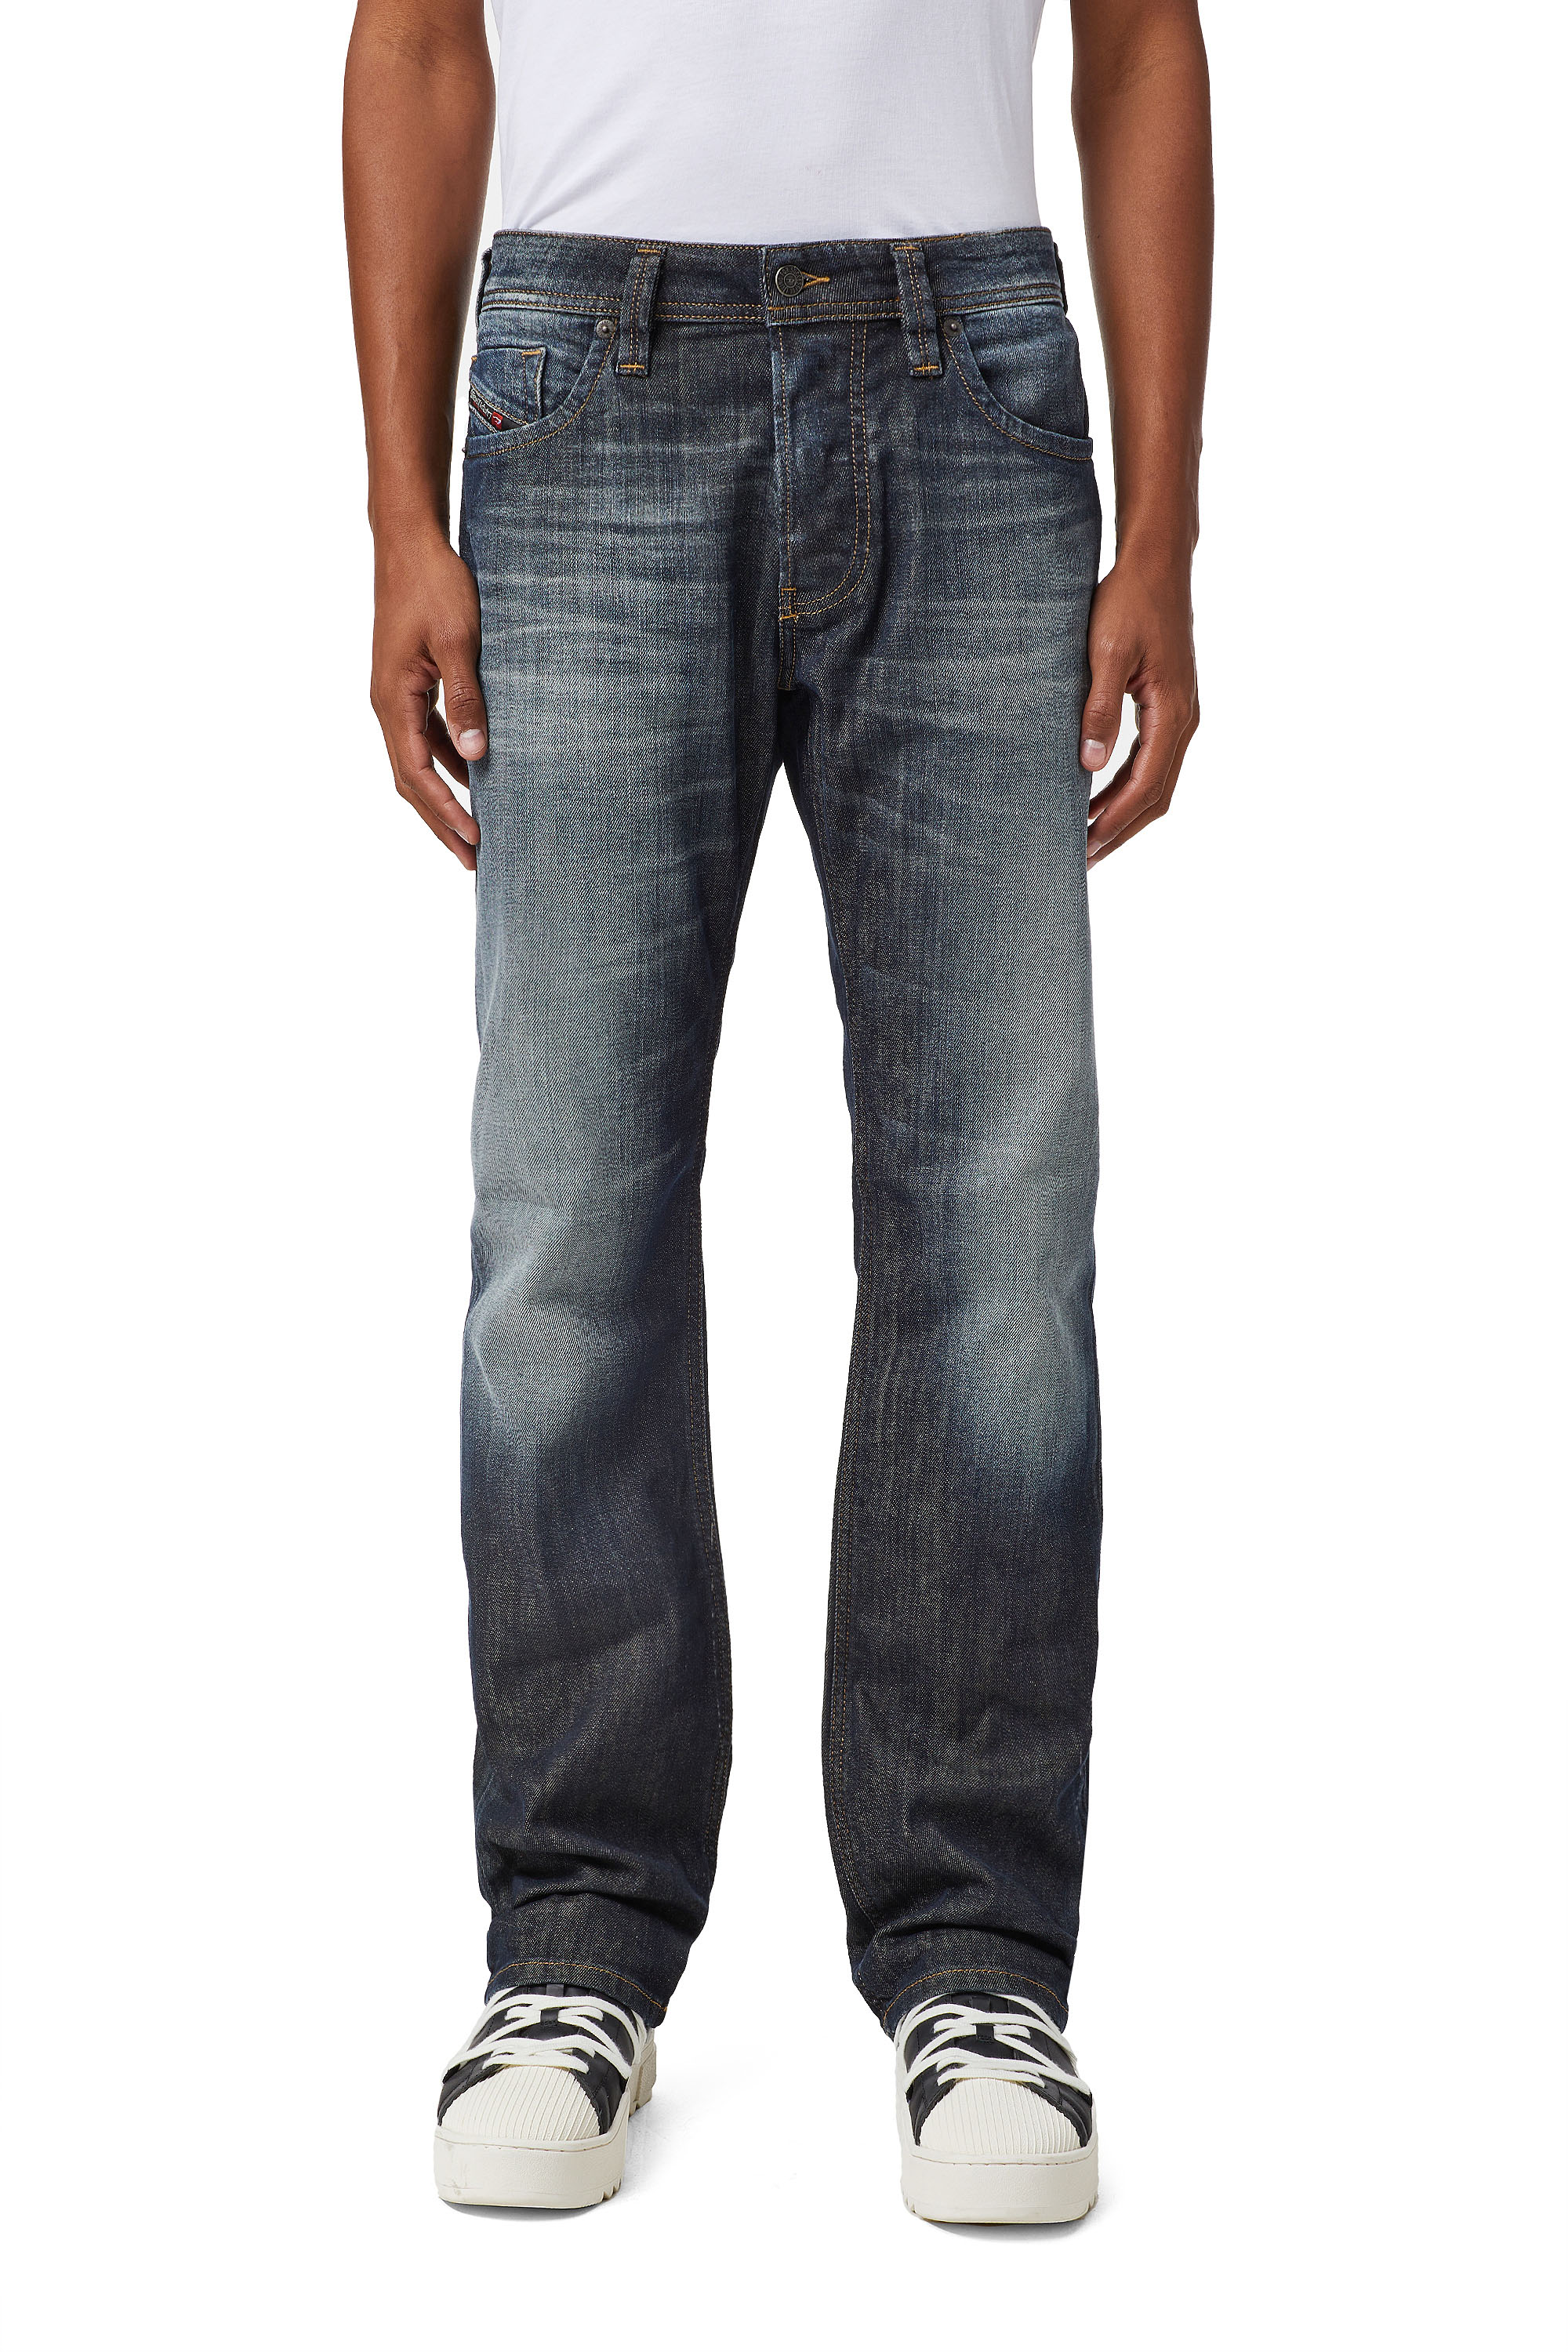 Diesel - Larkee 009EP Straight Jeans,  - Image 2